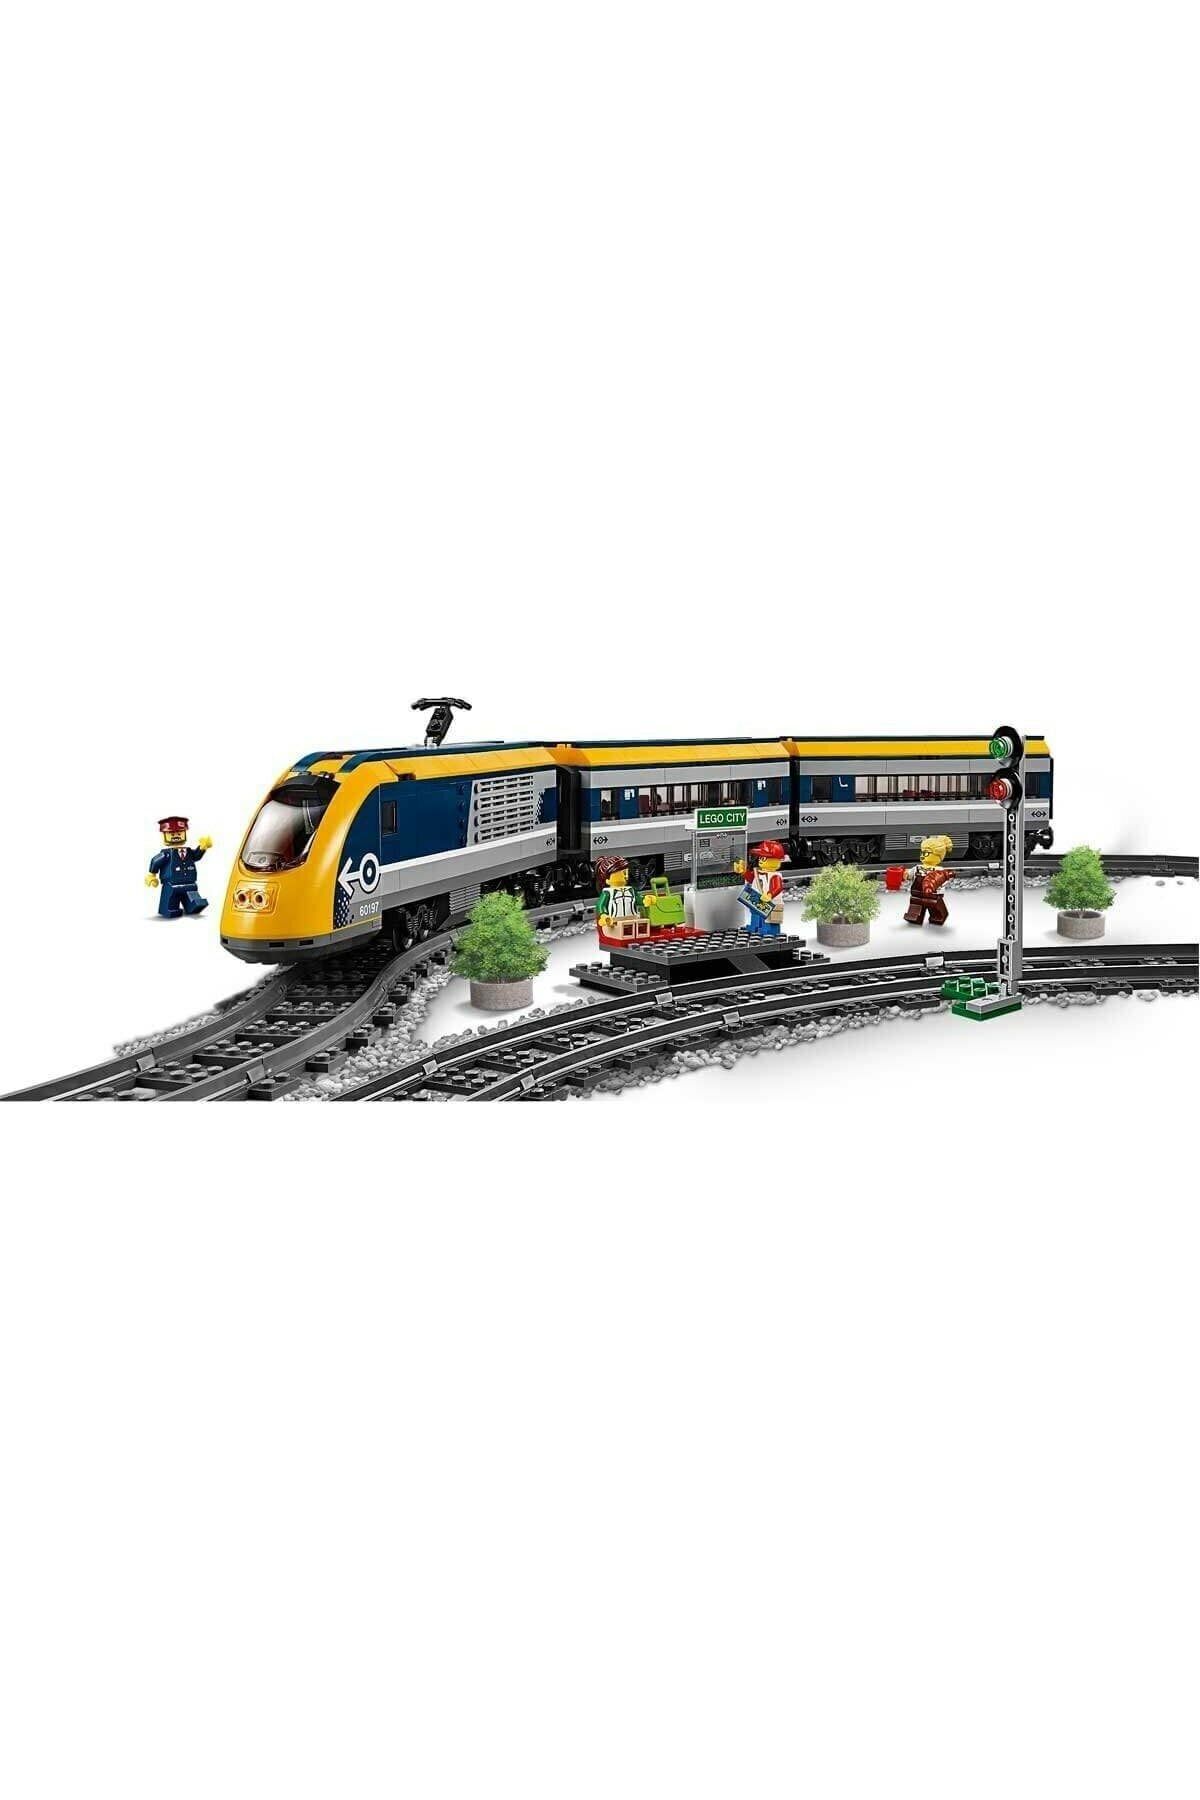 LEGO City Yolcu Treni 60197